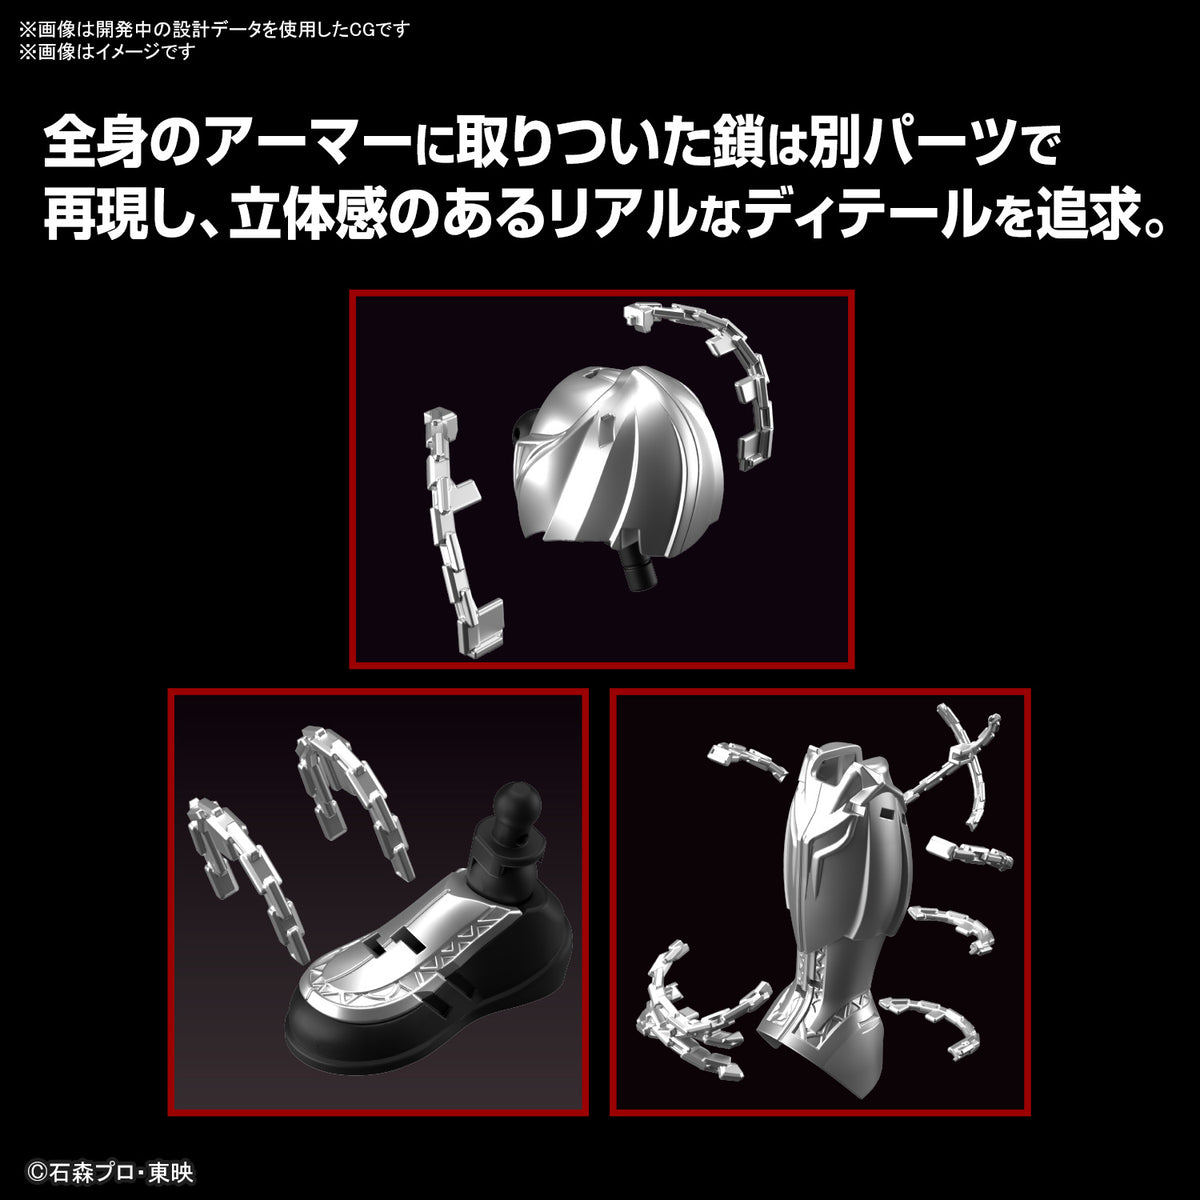 Figure-rise Standard Kamen Rider Kiva - Kiva Form